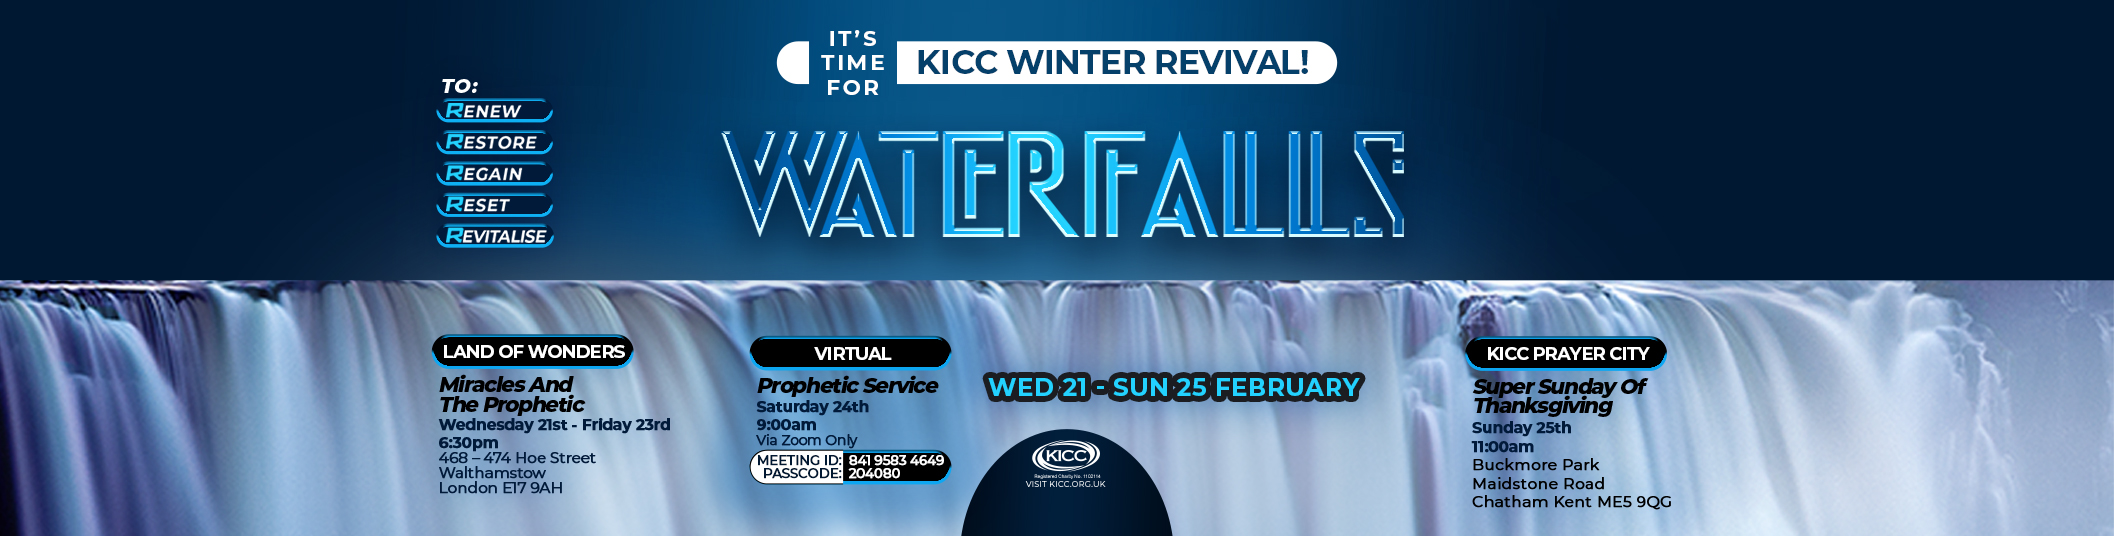 Waterfalls - KICC Winter Revival